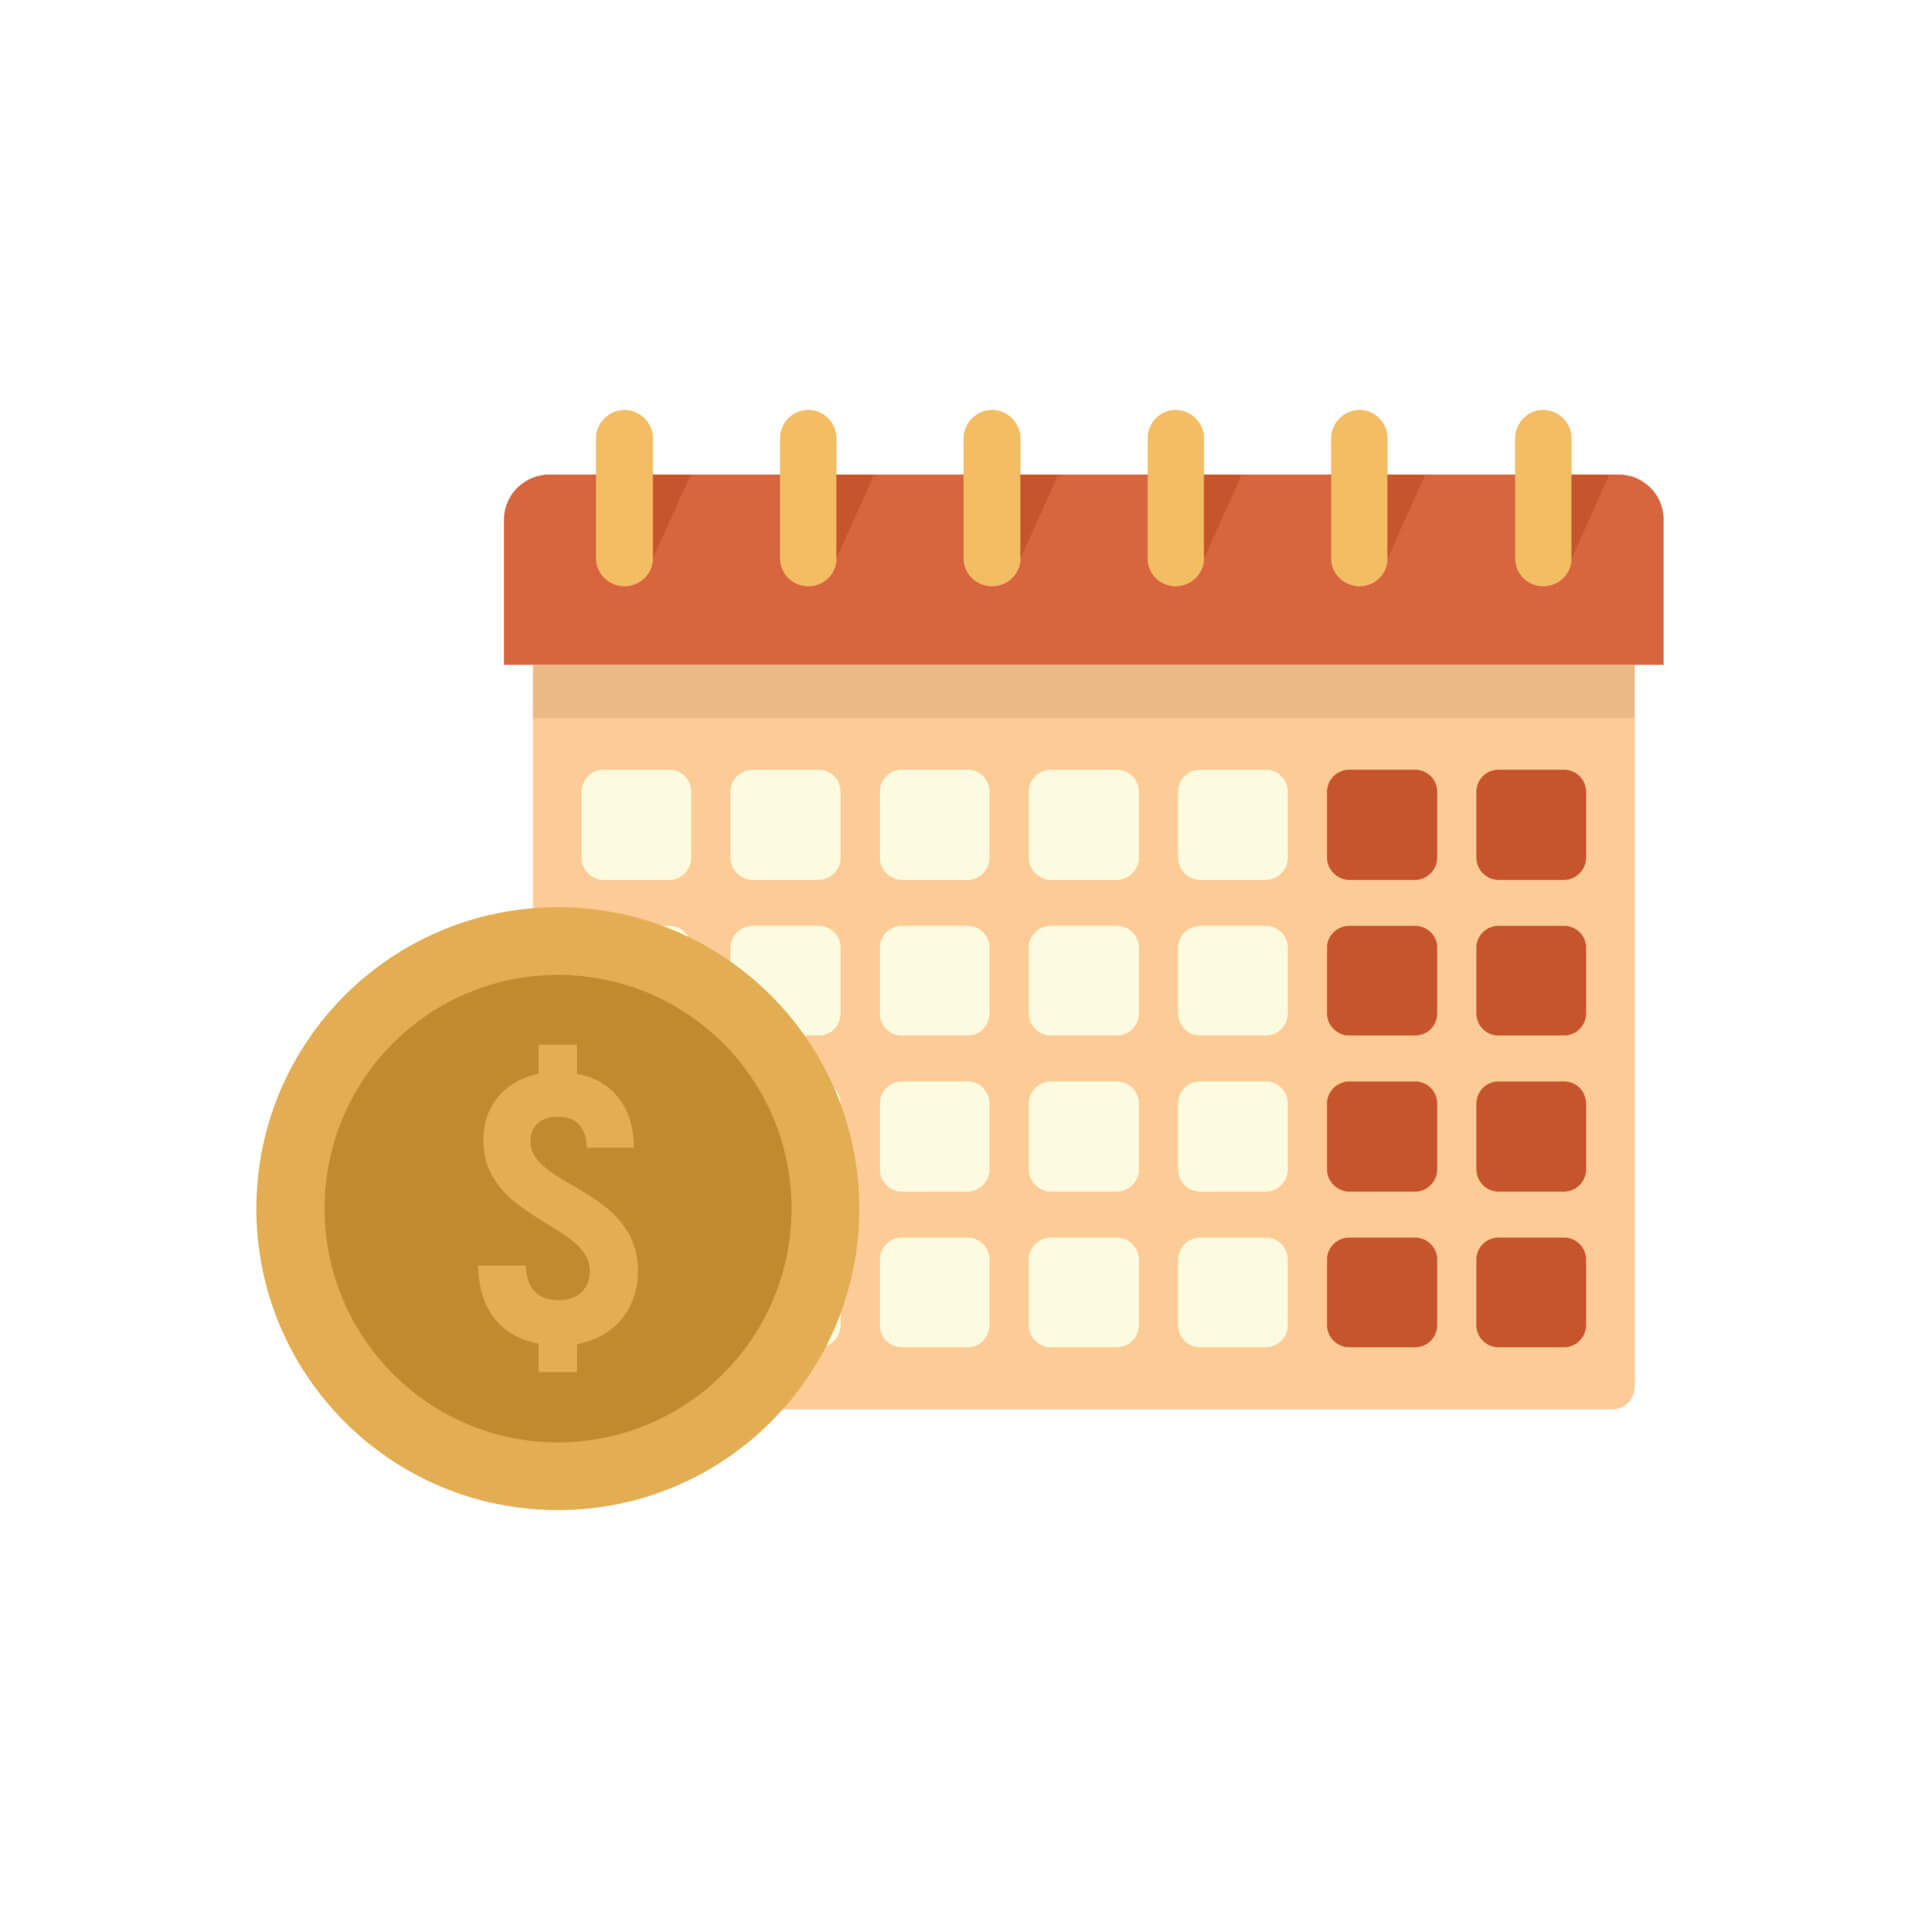 SaaS Business Model - Calendar Payment